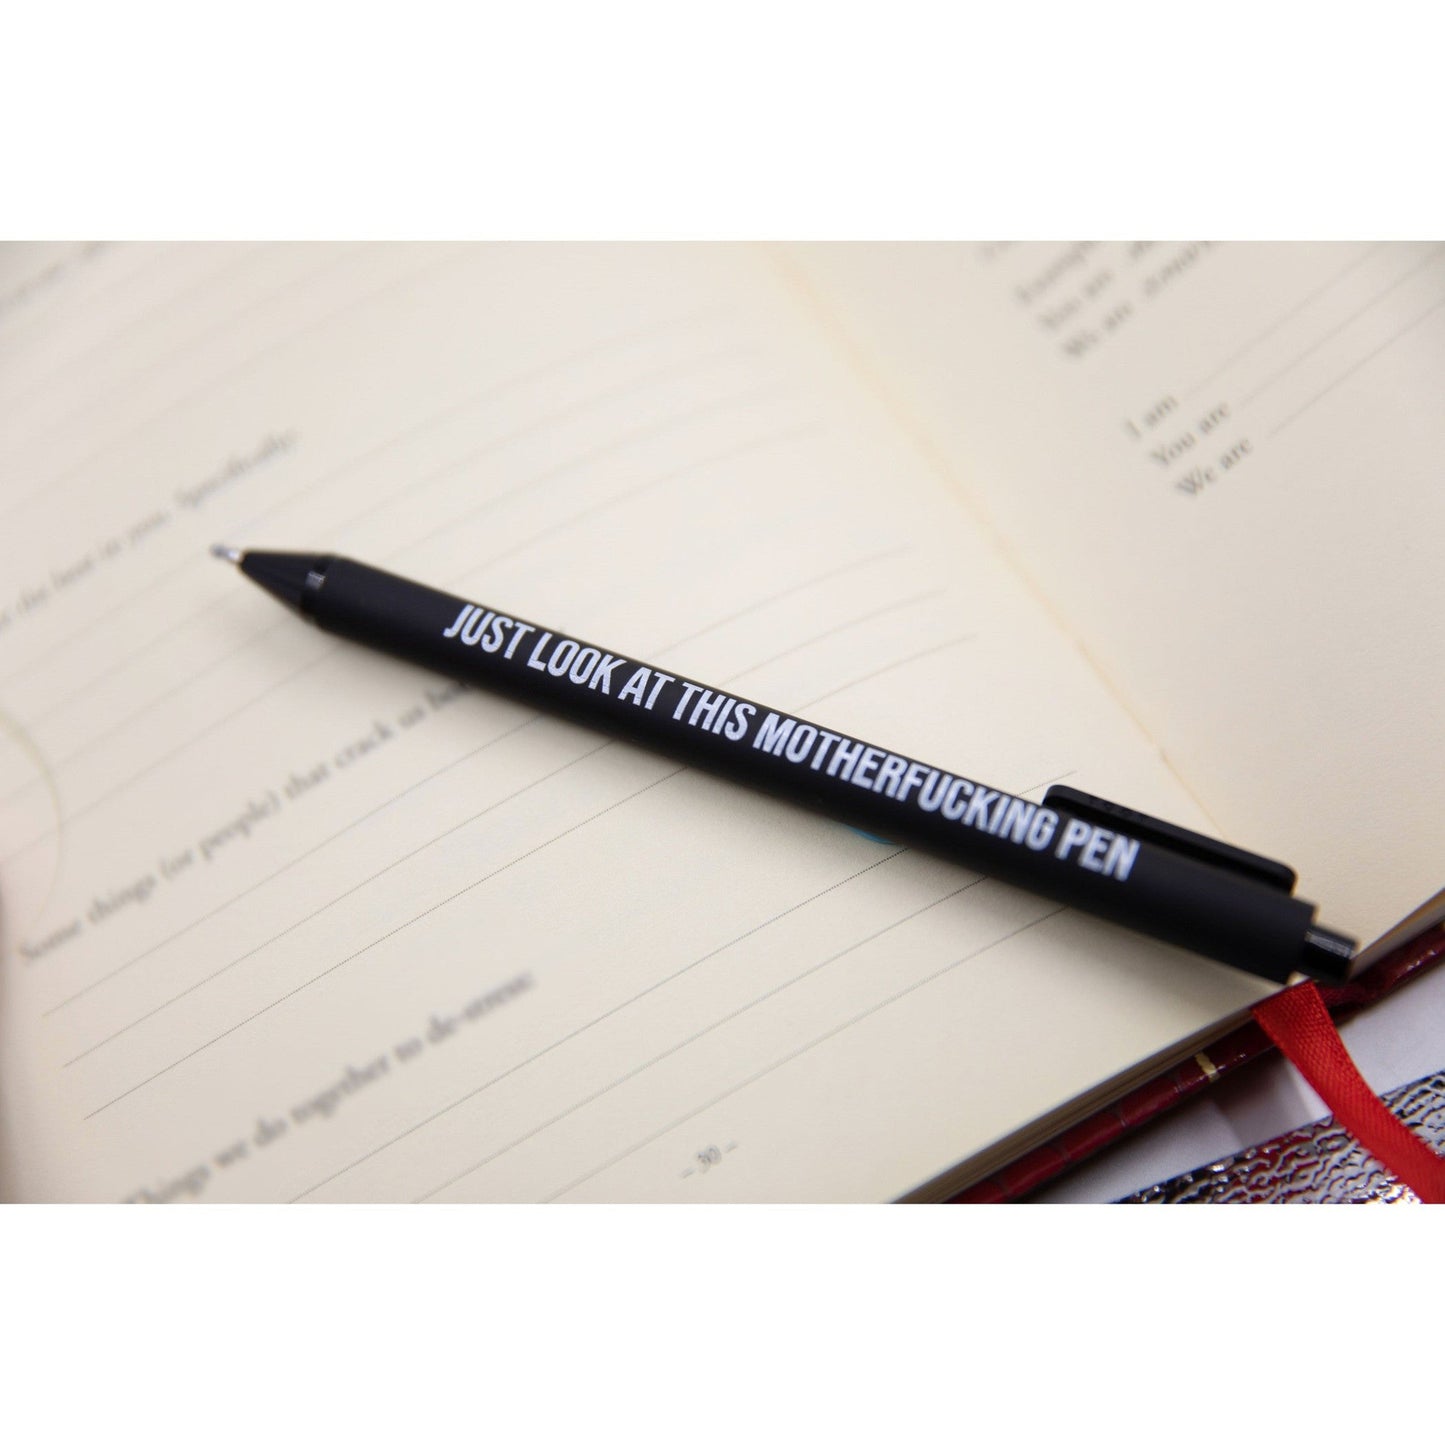 Sweary Fuck Pens Cussing Pen Gift Set - 5 Black Gel Pens Rife with Profanity